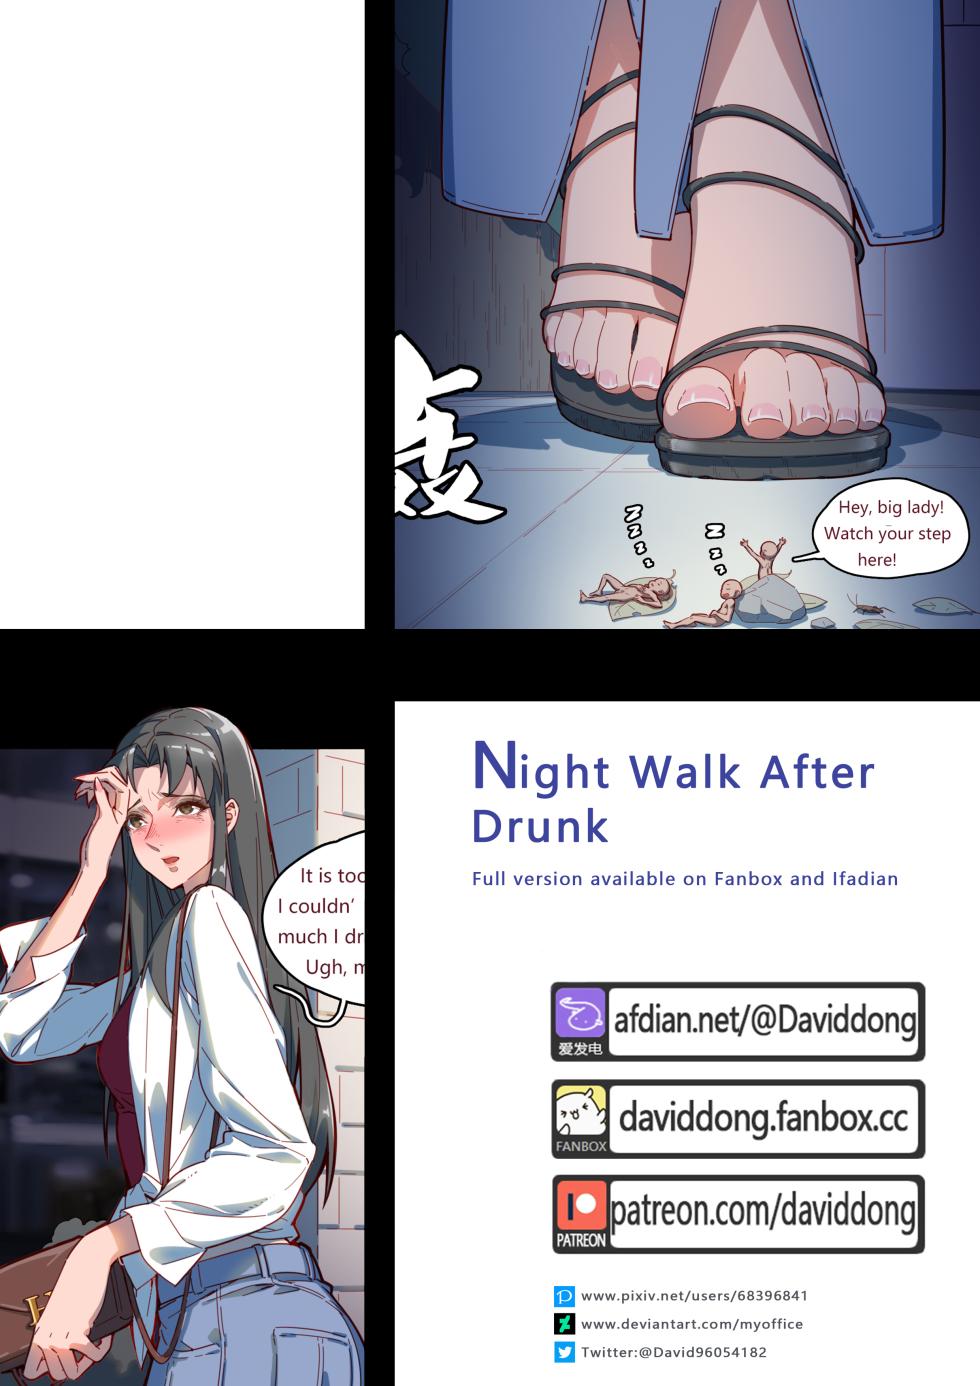 [DavidDong] - Night Walk After Drunk - Page 1